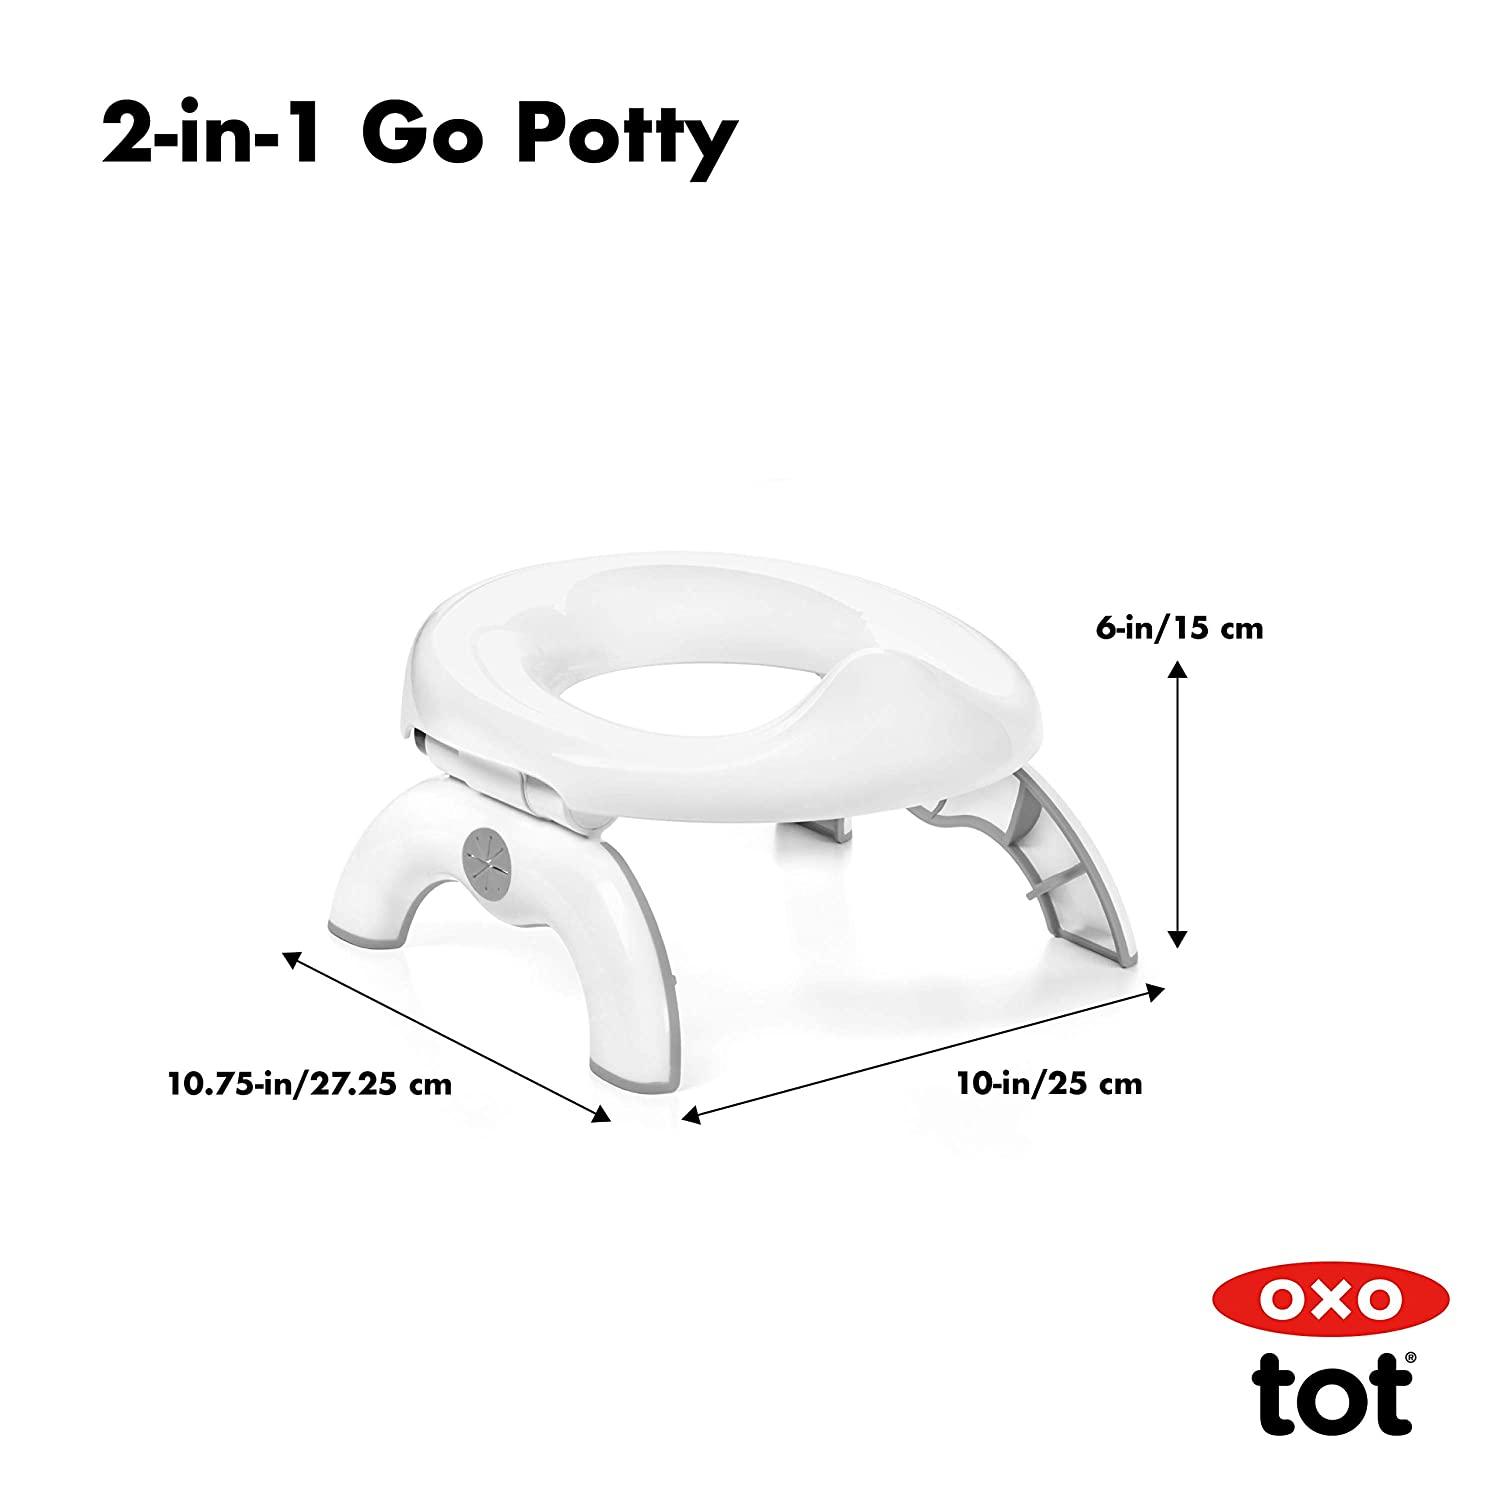 Oxo Tot 2-in-1 Go Potty - Gray : Target